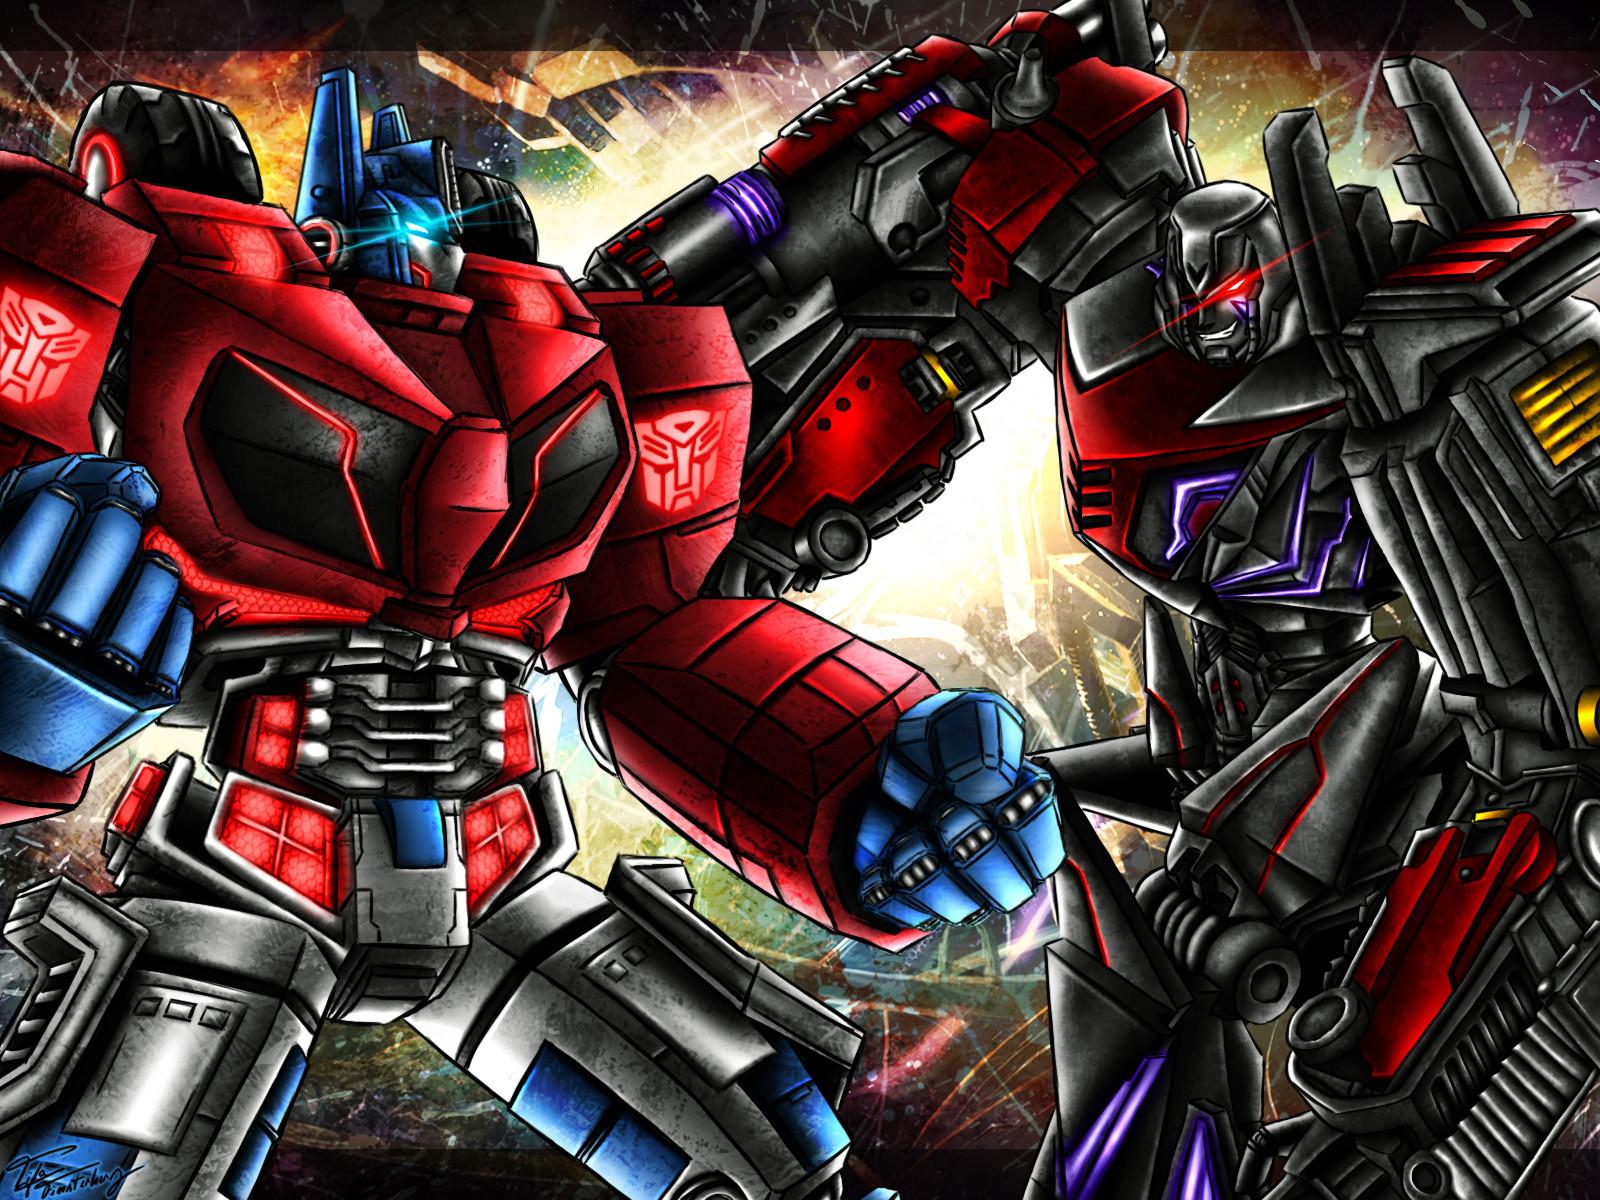 Transformers War For Cybertron Wallpaper | HD Wallpapers Range